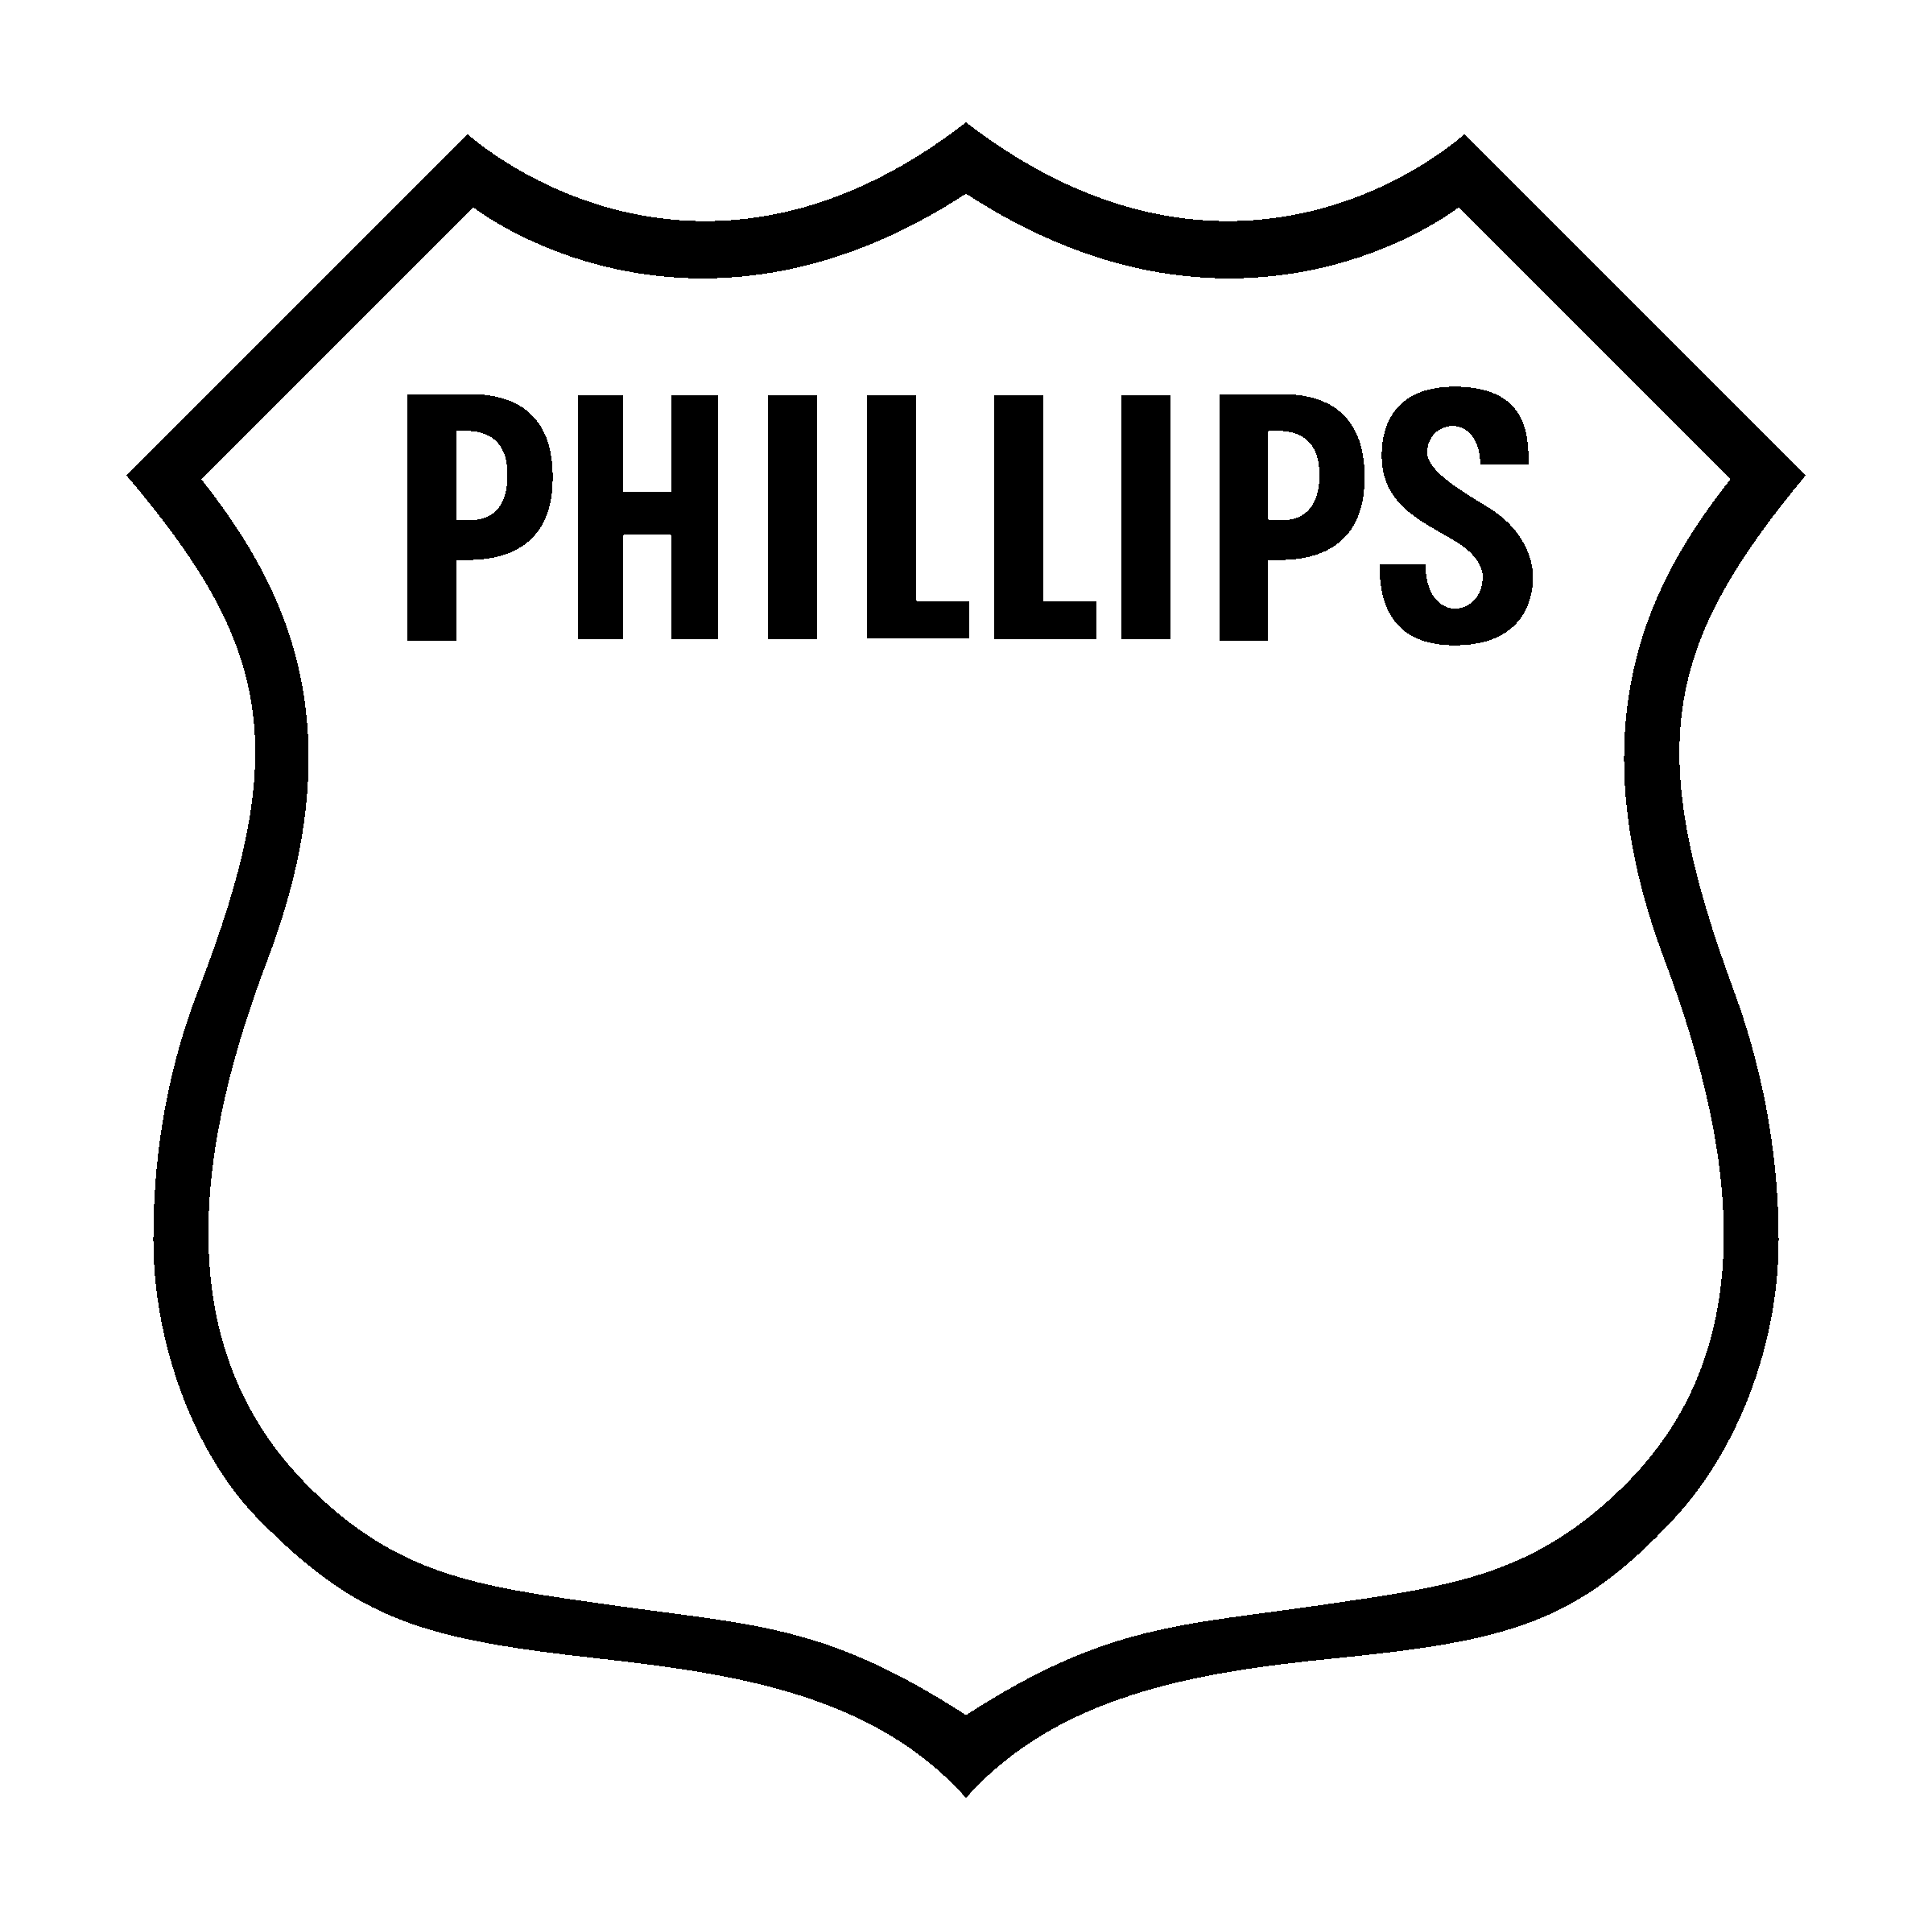 Phillips 66 Logo - Phillips 66 Logo PNG Transparent & SVG Vector - Freebie Supply